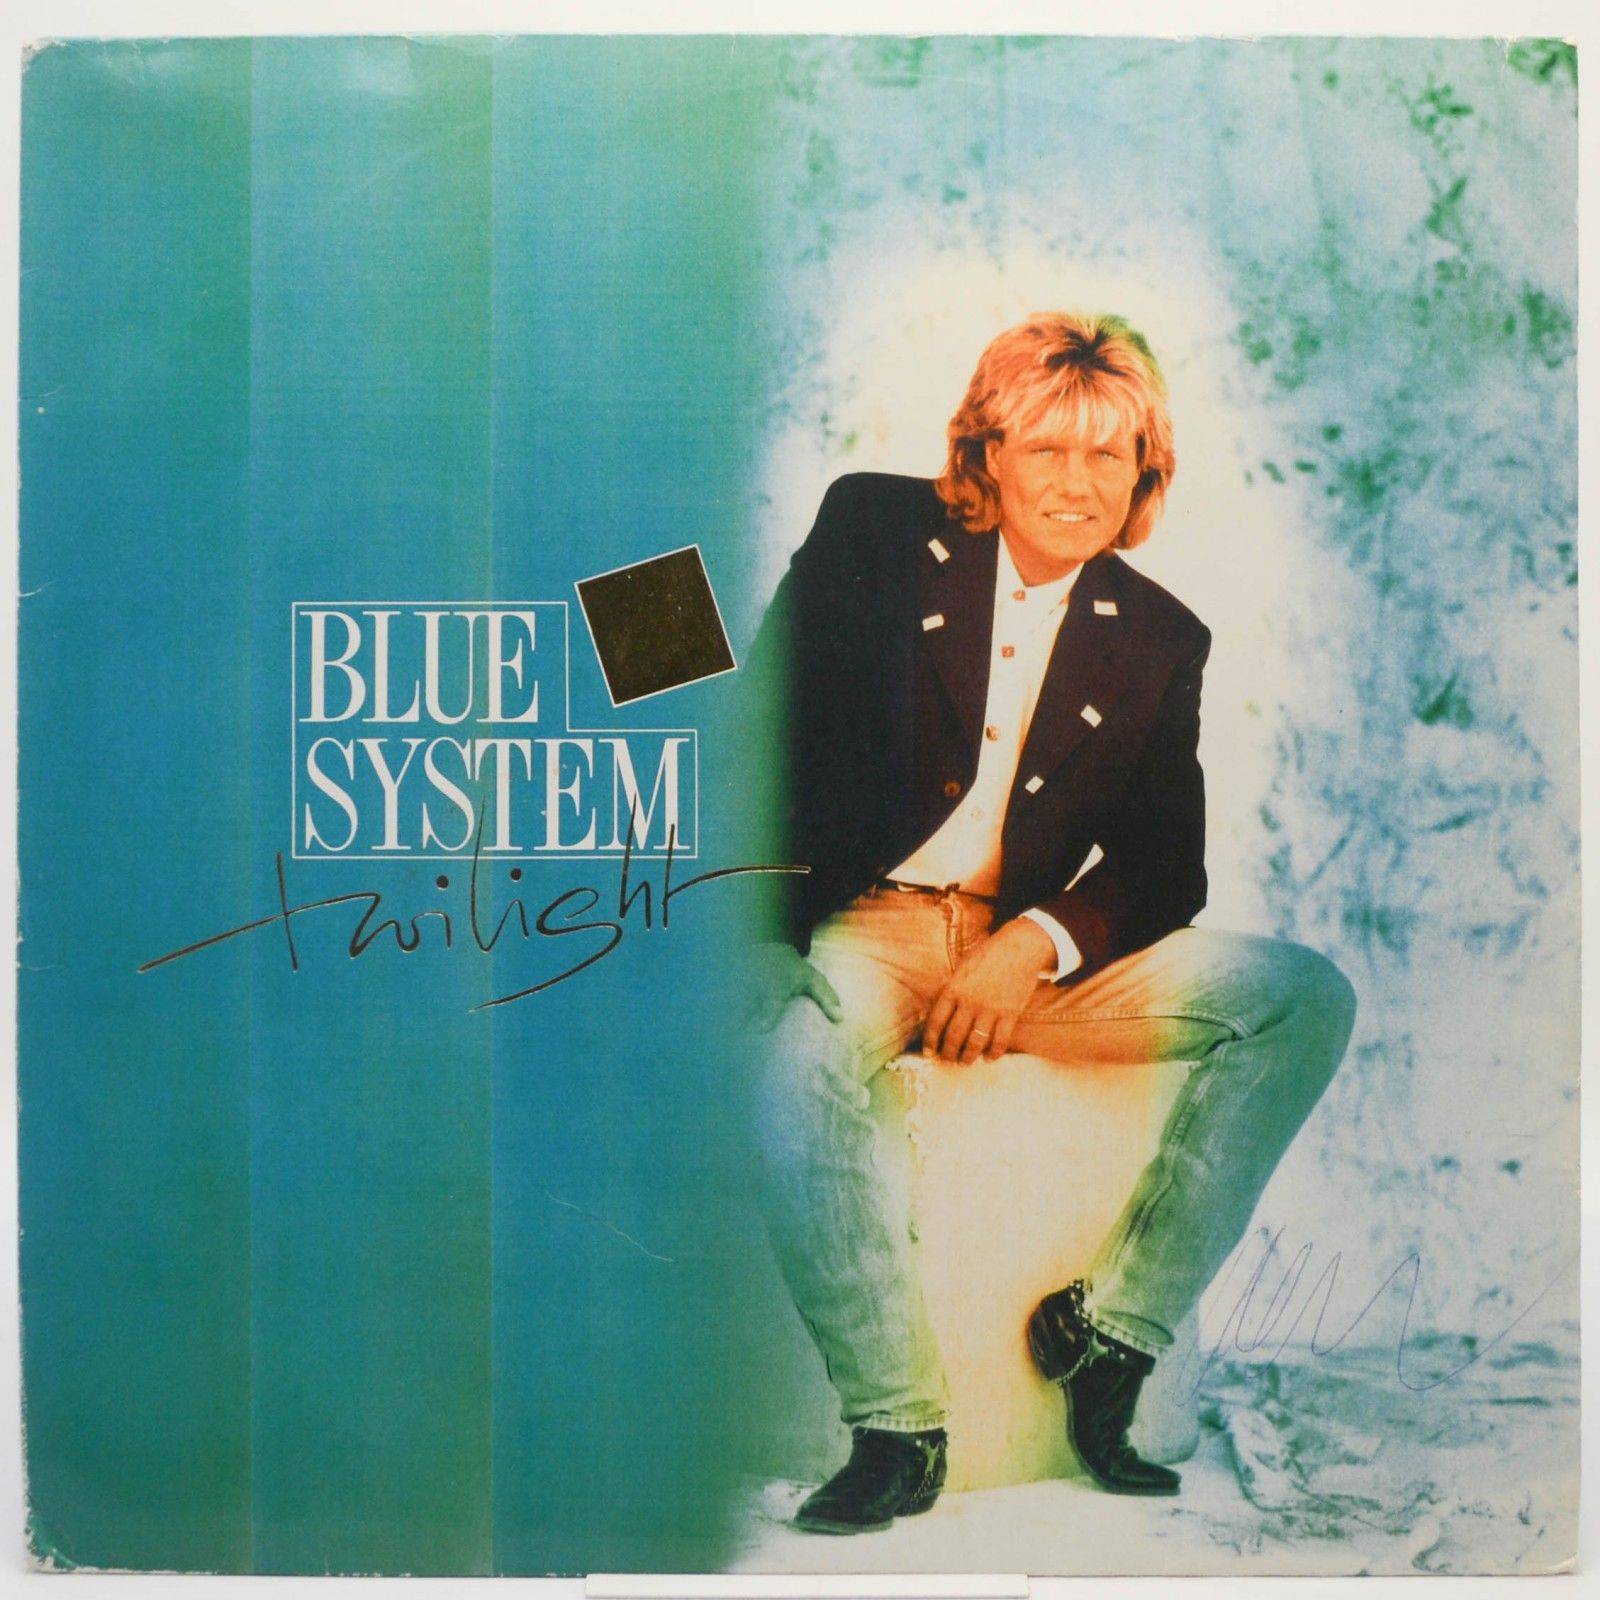 Blue System — Twilight, 1989